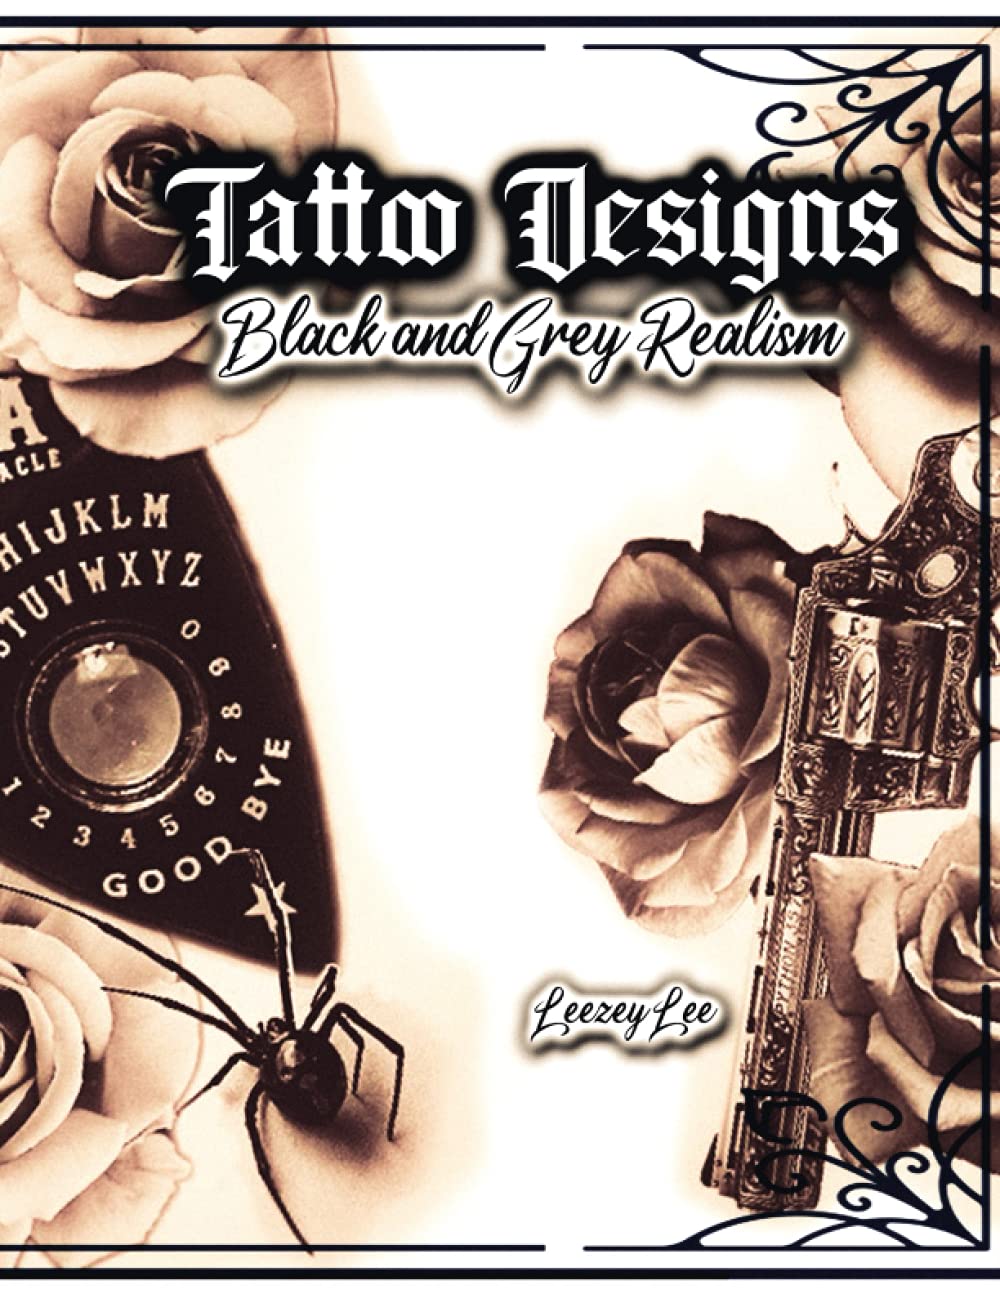 Tattoo Designs Black and Grey Realism SureShot Books